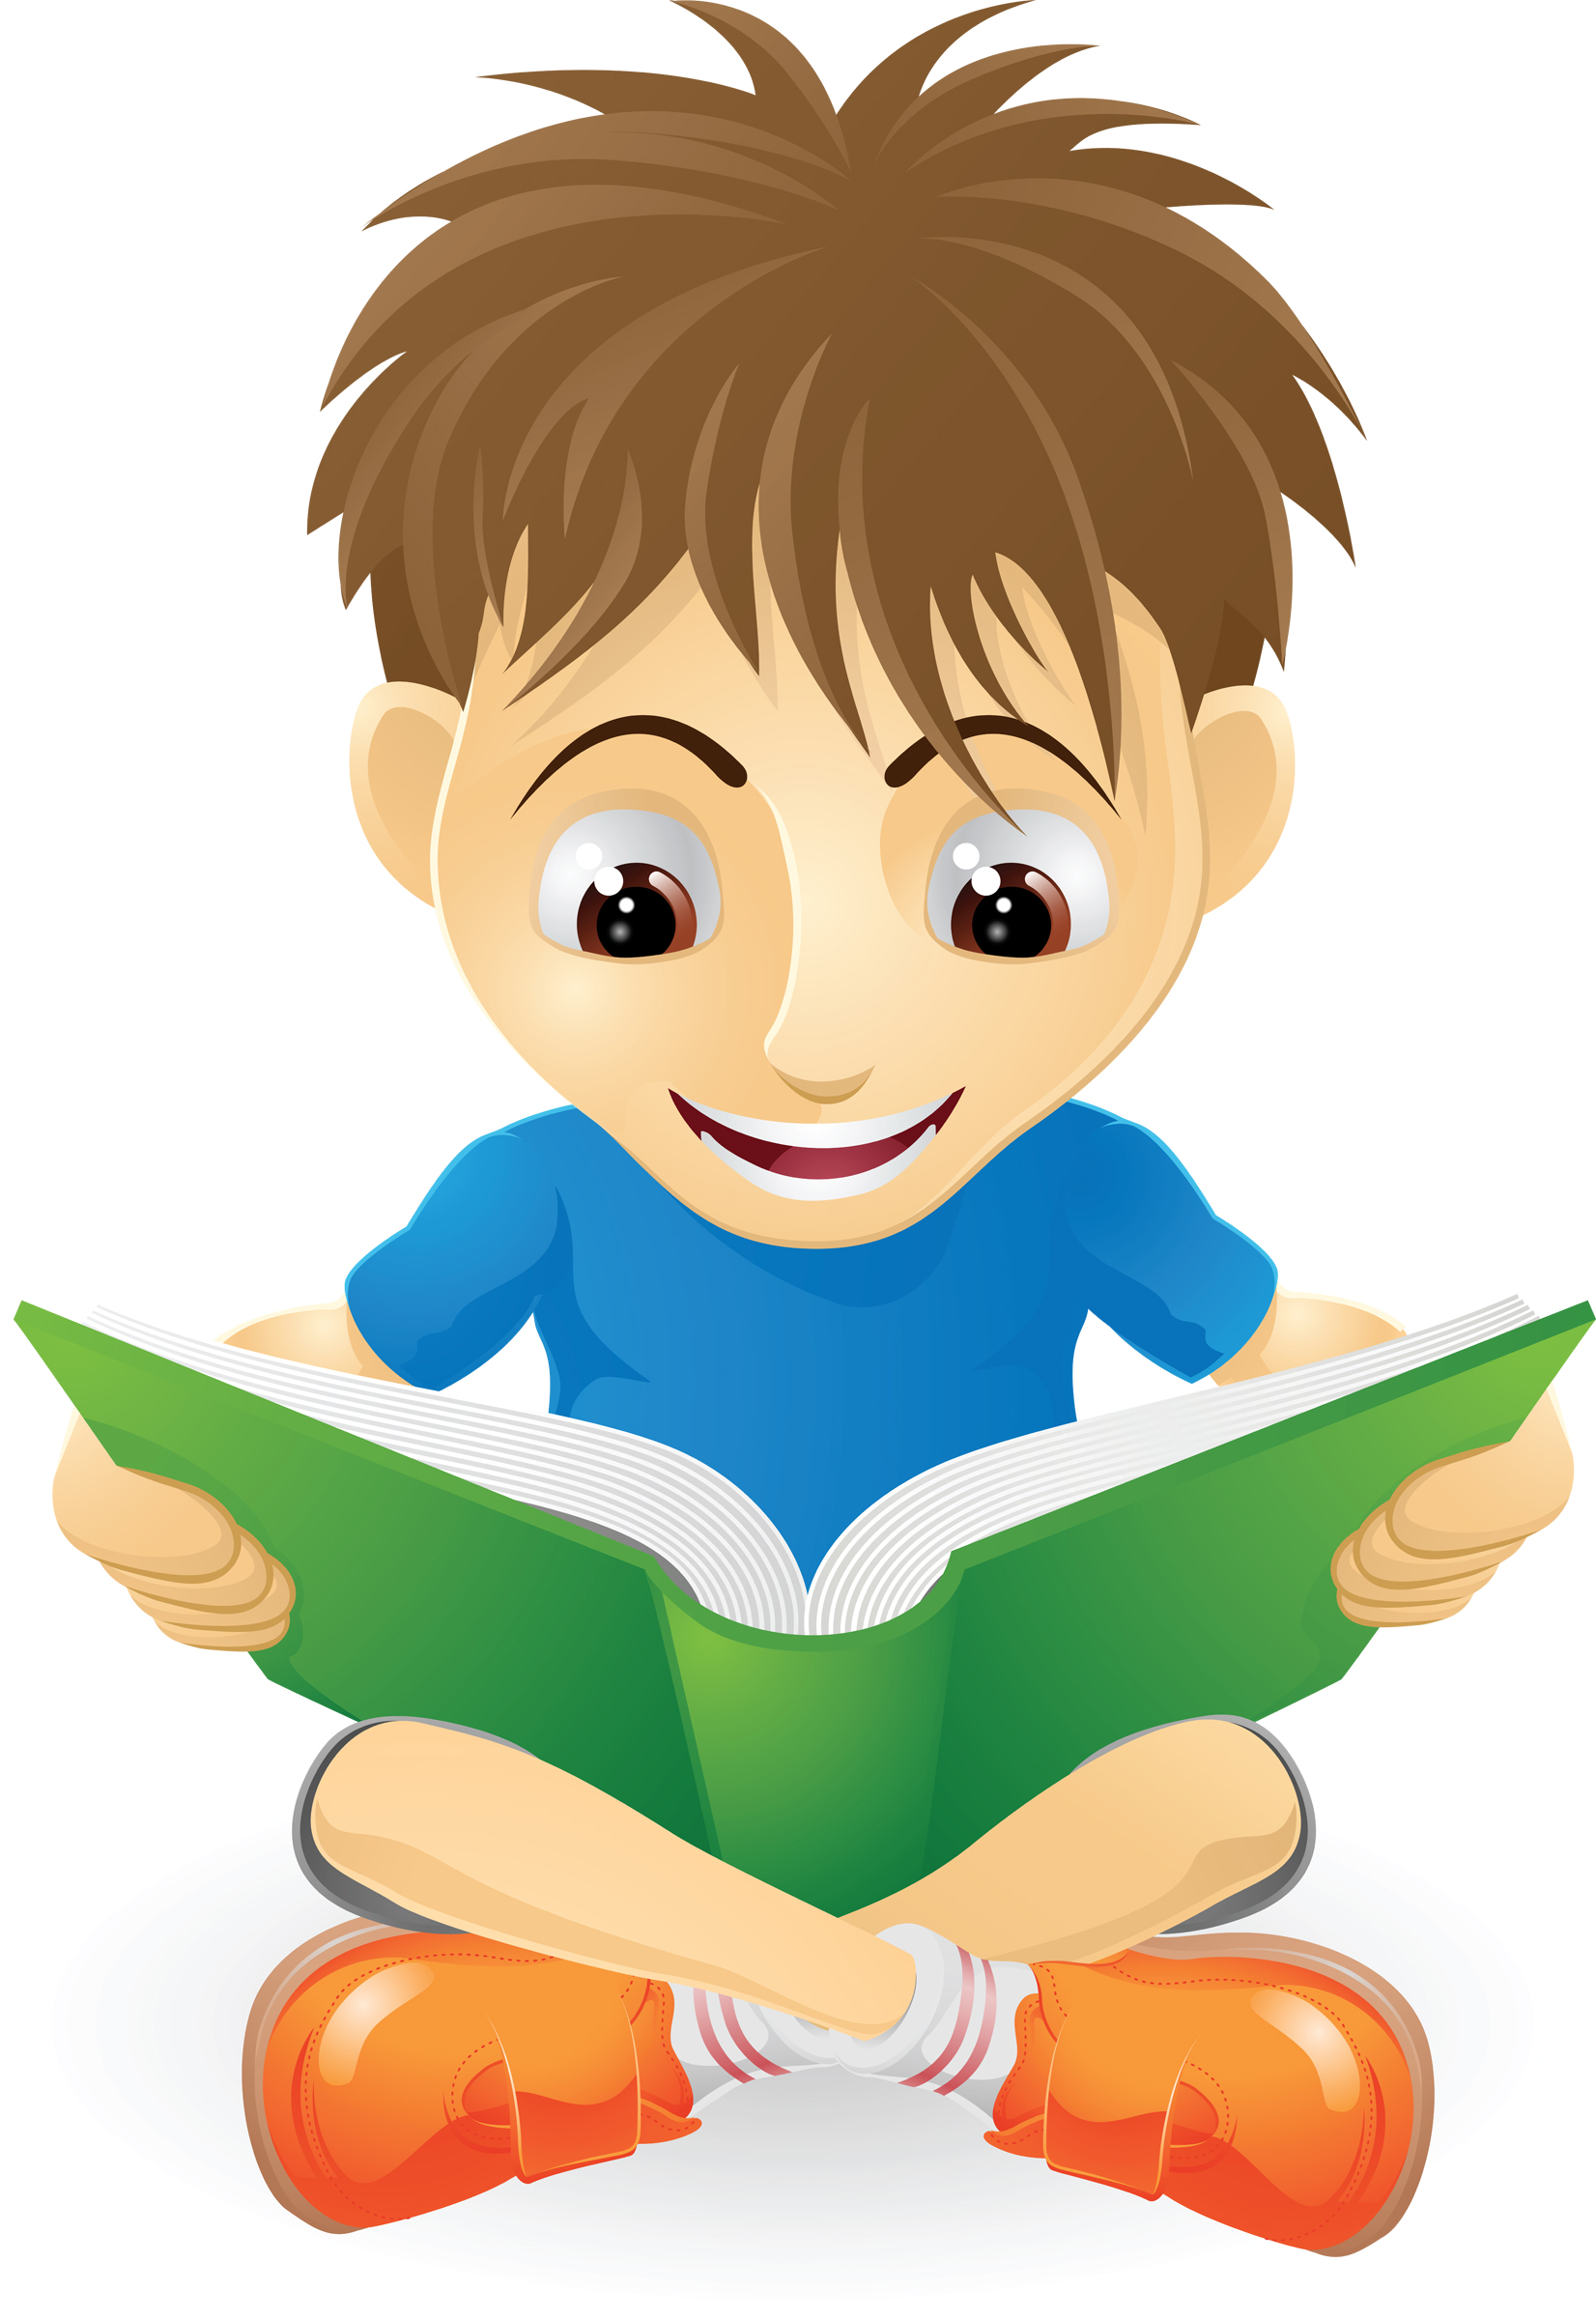 Child reading reading.